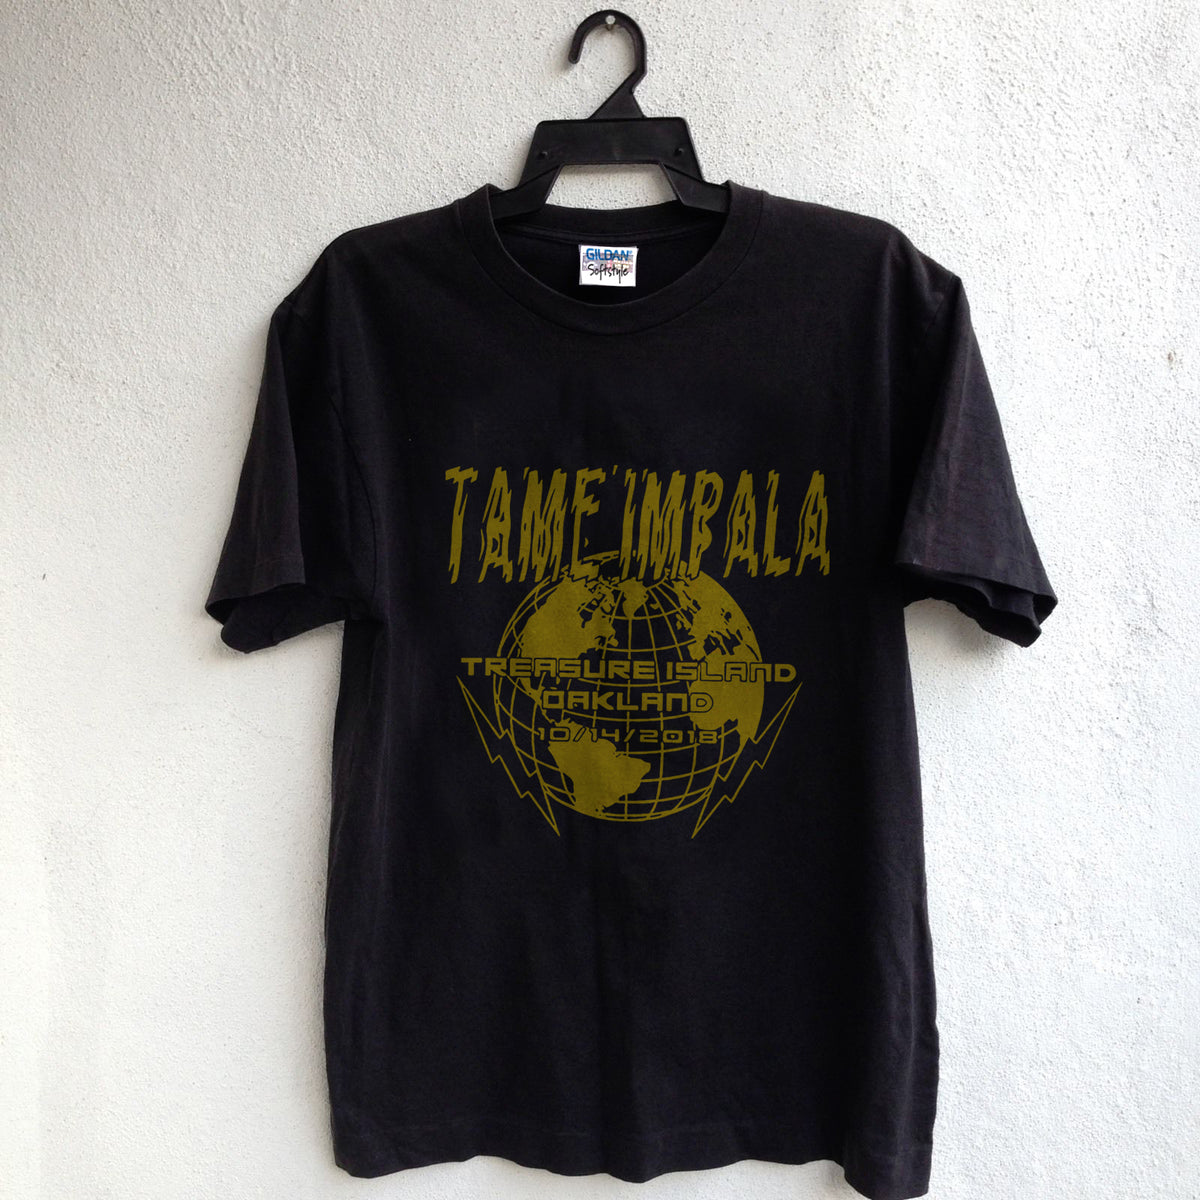 Tame Impala Tour shirt